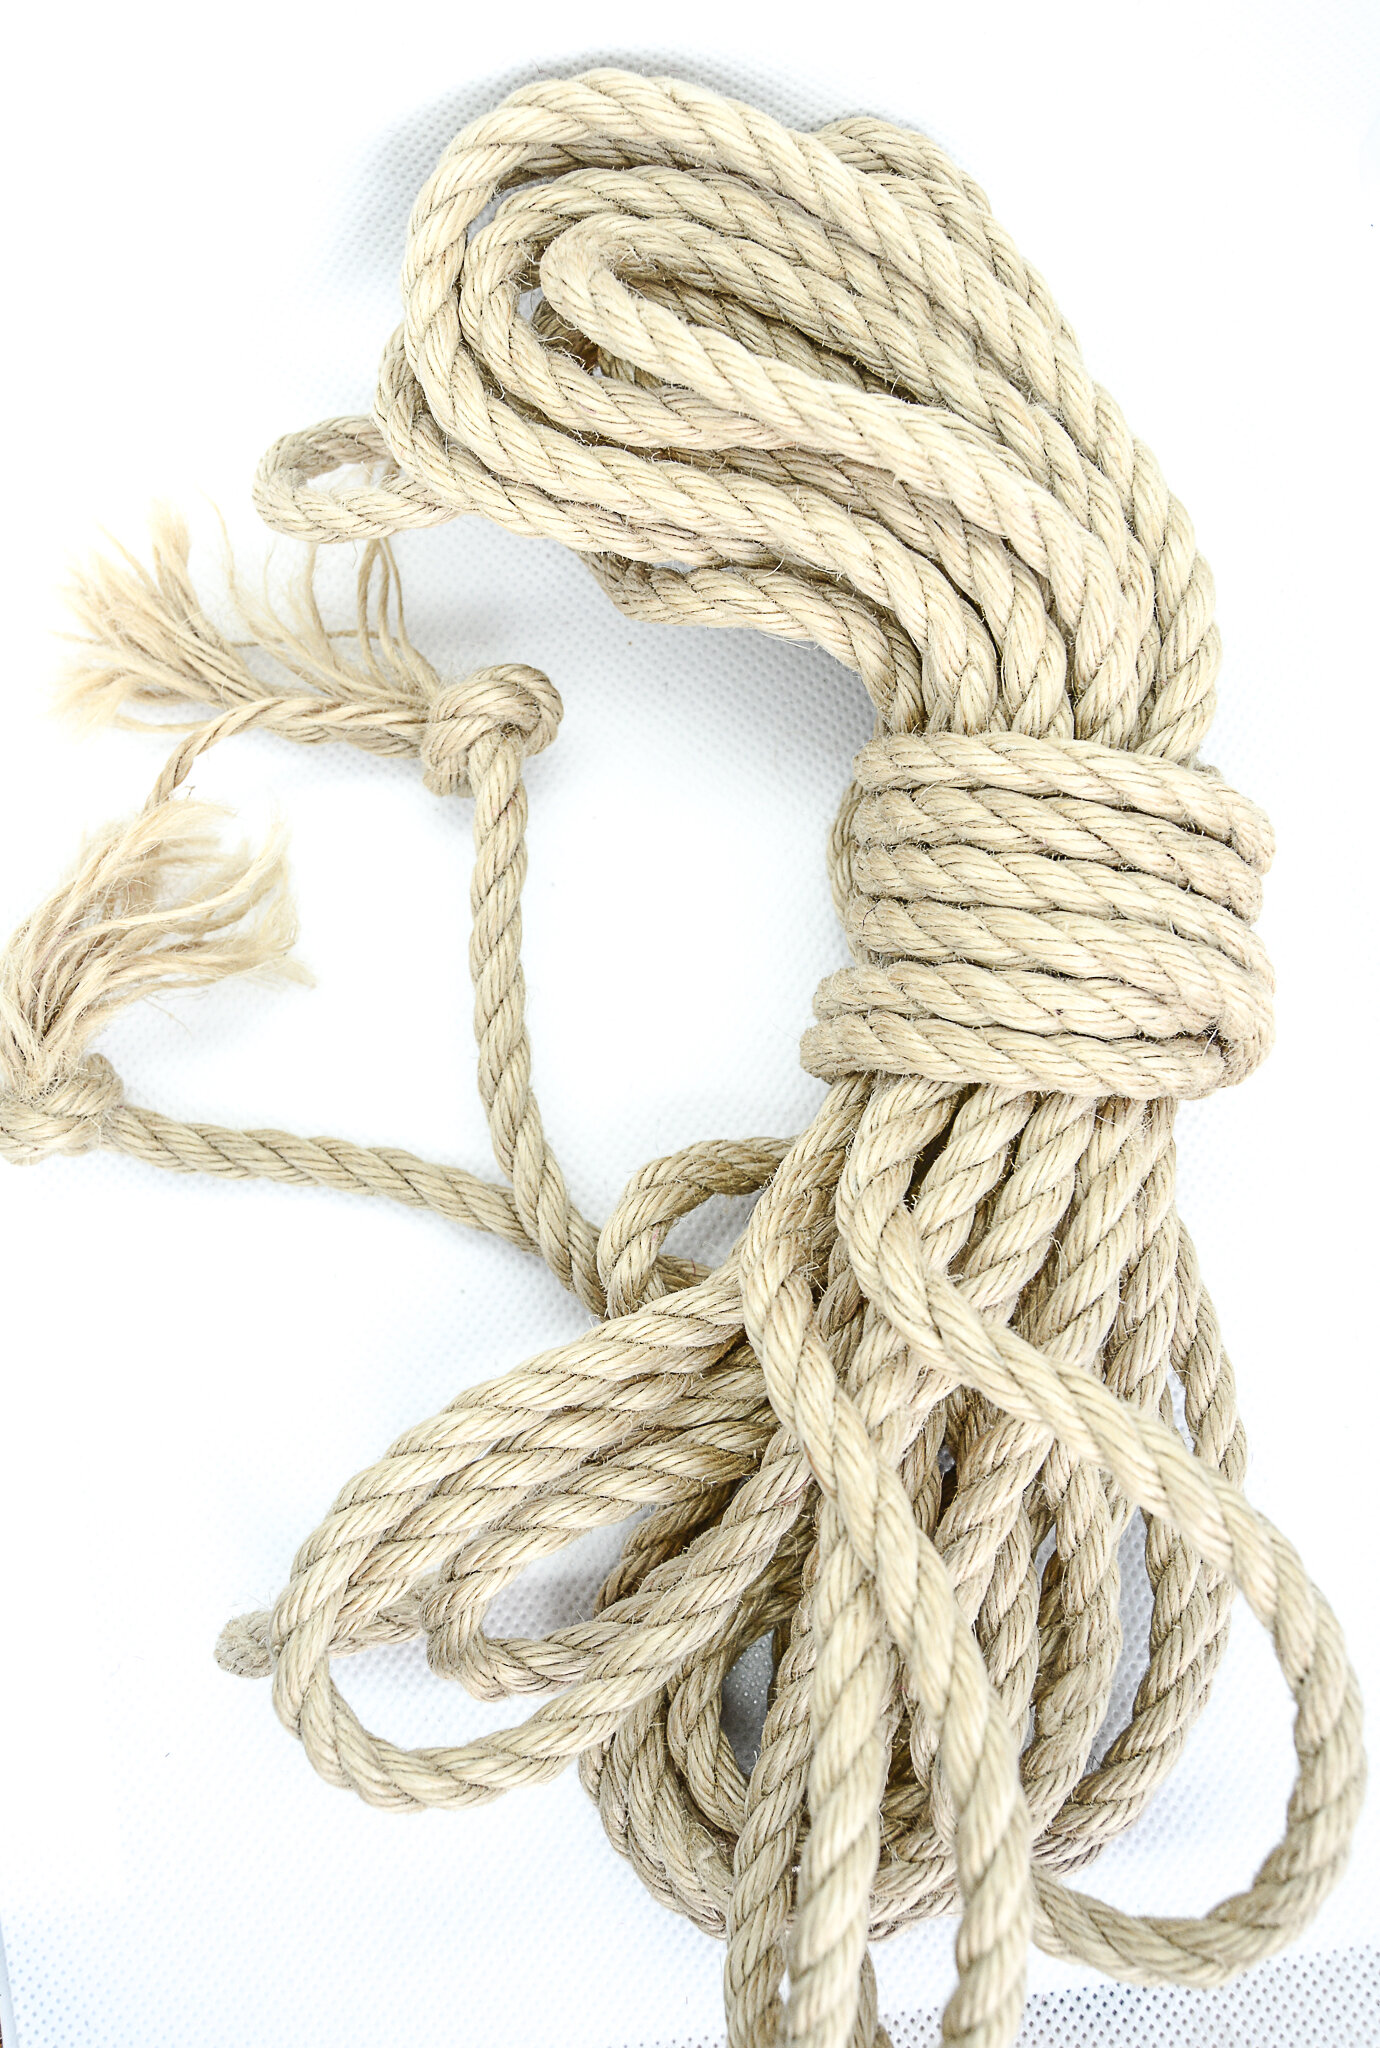 Solide poulie et jute corde heavy duty industrial crochet bloquer bondage kinbaku 